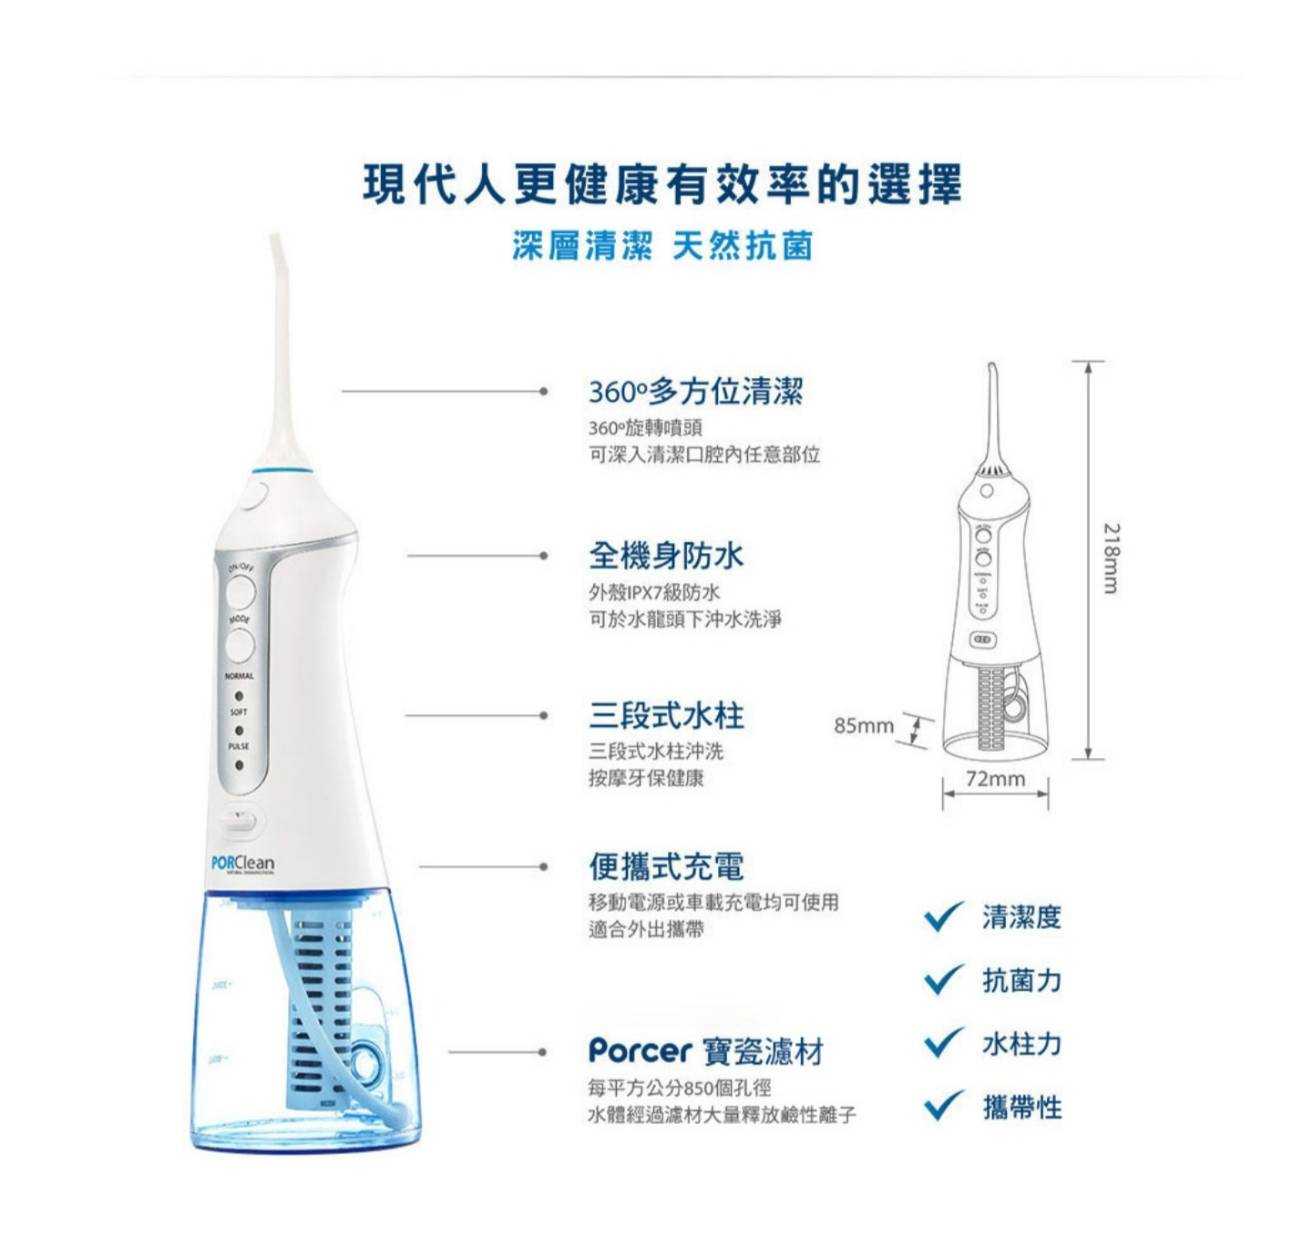 PORClean 寶可齡 抗菌沖牙機大全配組(濾芯x3+噴嘴x4) MD-20 強強滾生活 洗牙 牙線機 牙齒清潔機